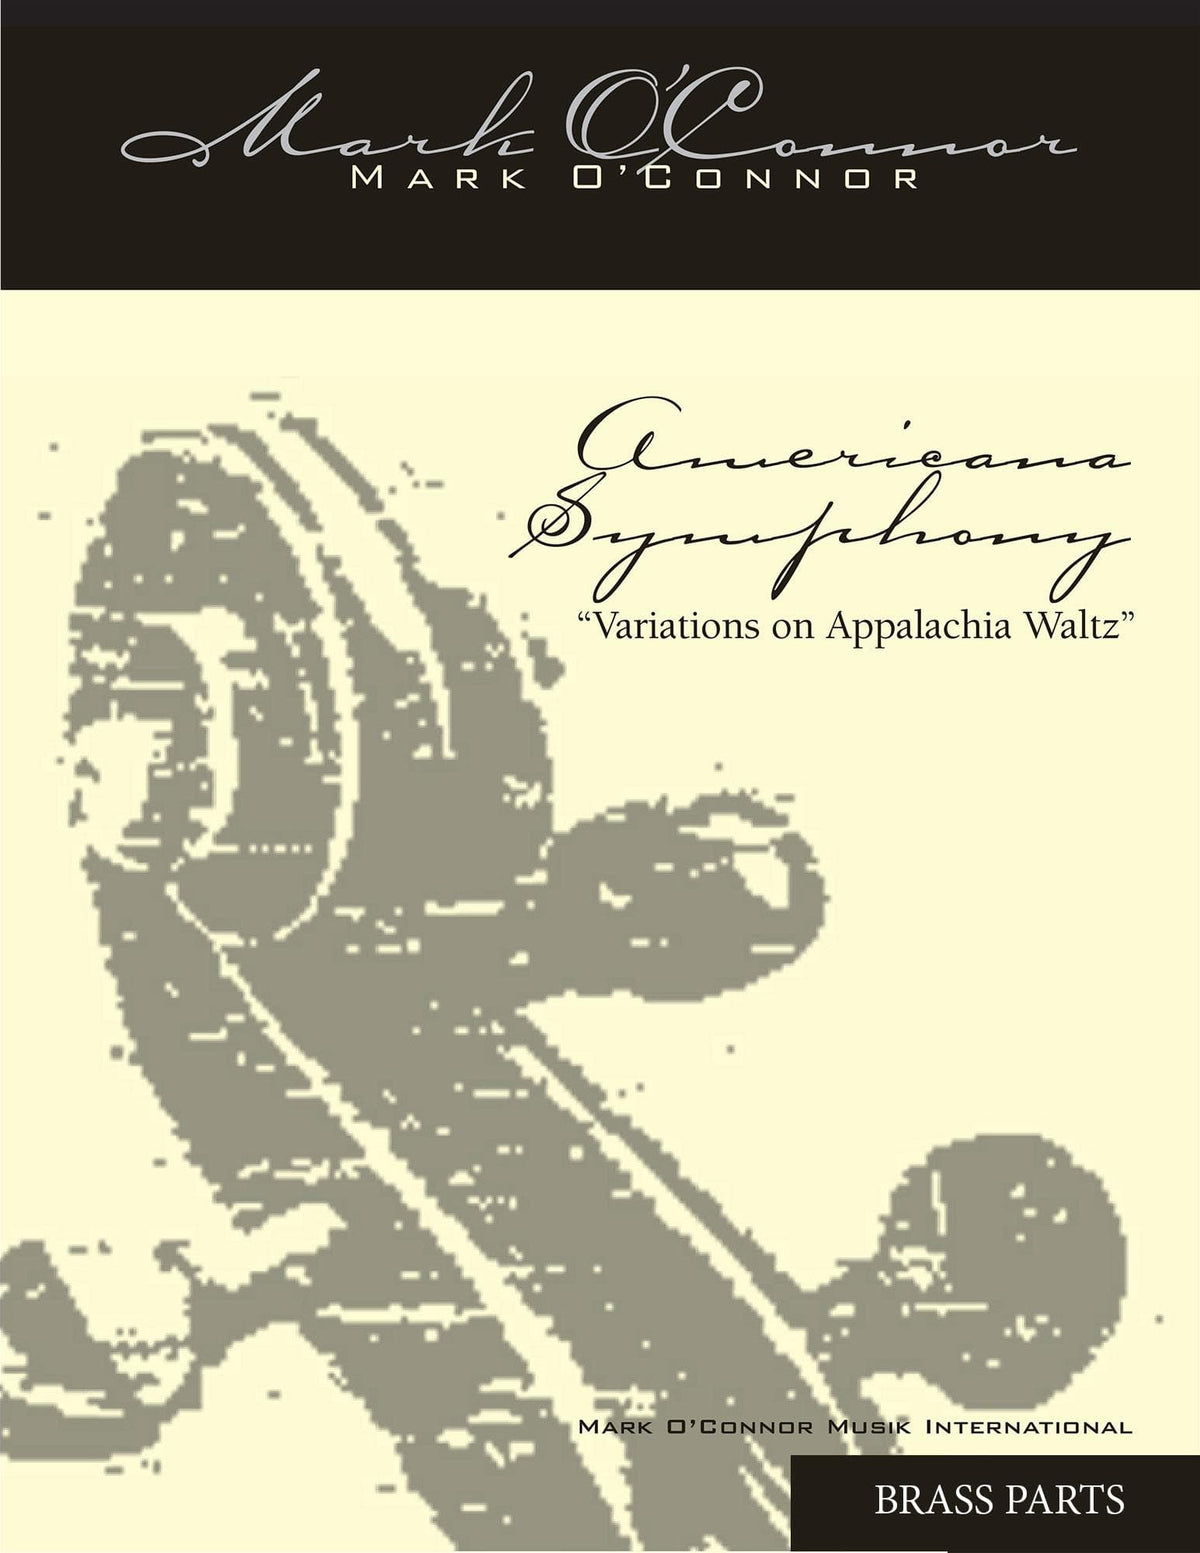 O'Connor, Mark - Americana Symphony "Variations on Appalachia Waltz" - Brass Parts - Digital Download